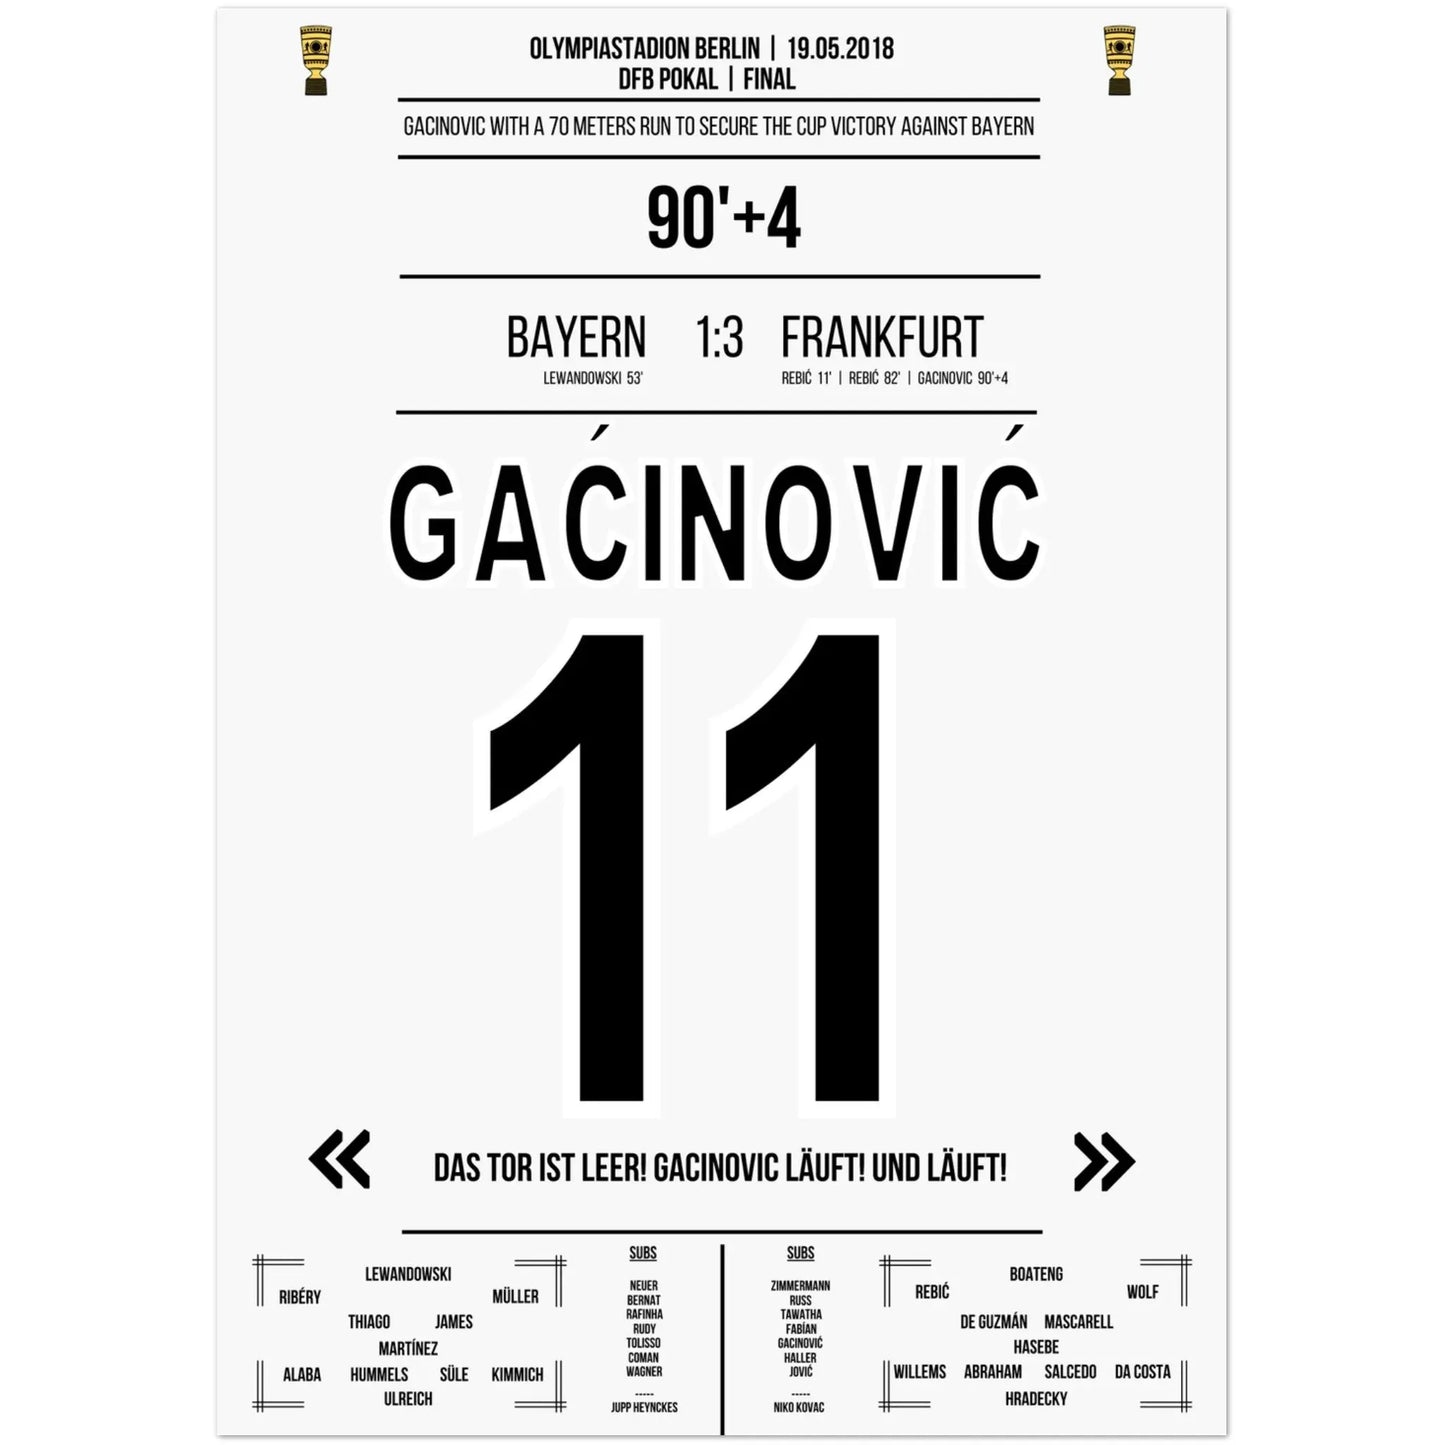 La course de 70 mètres de Gacinovic jusqu'au triomphe en coupe contre le Bayern en 2018